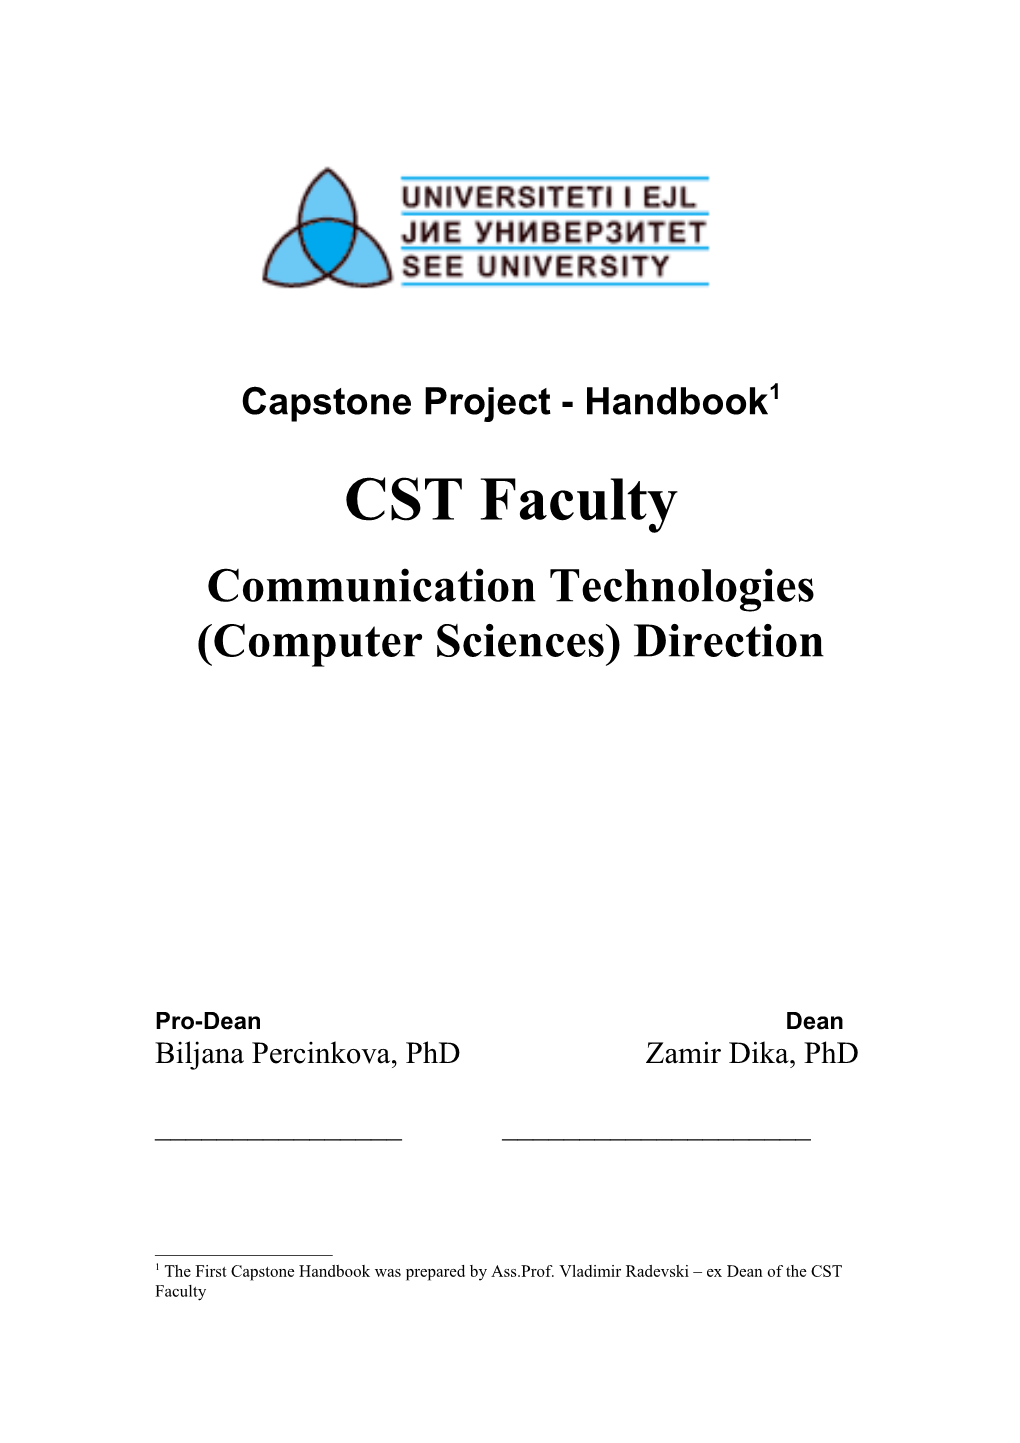 Communication Technologies (Computer Sciences) Direction